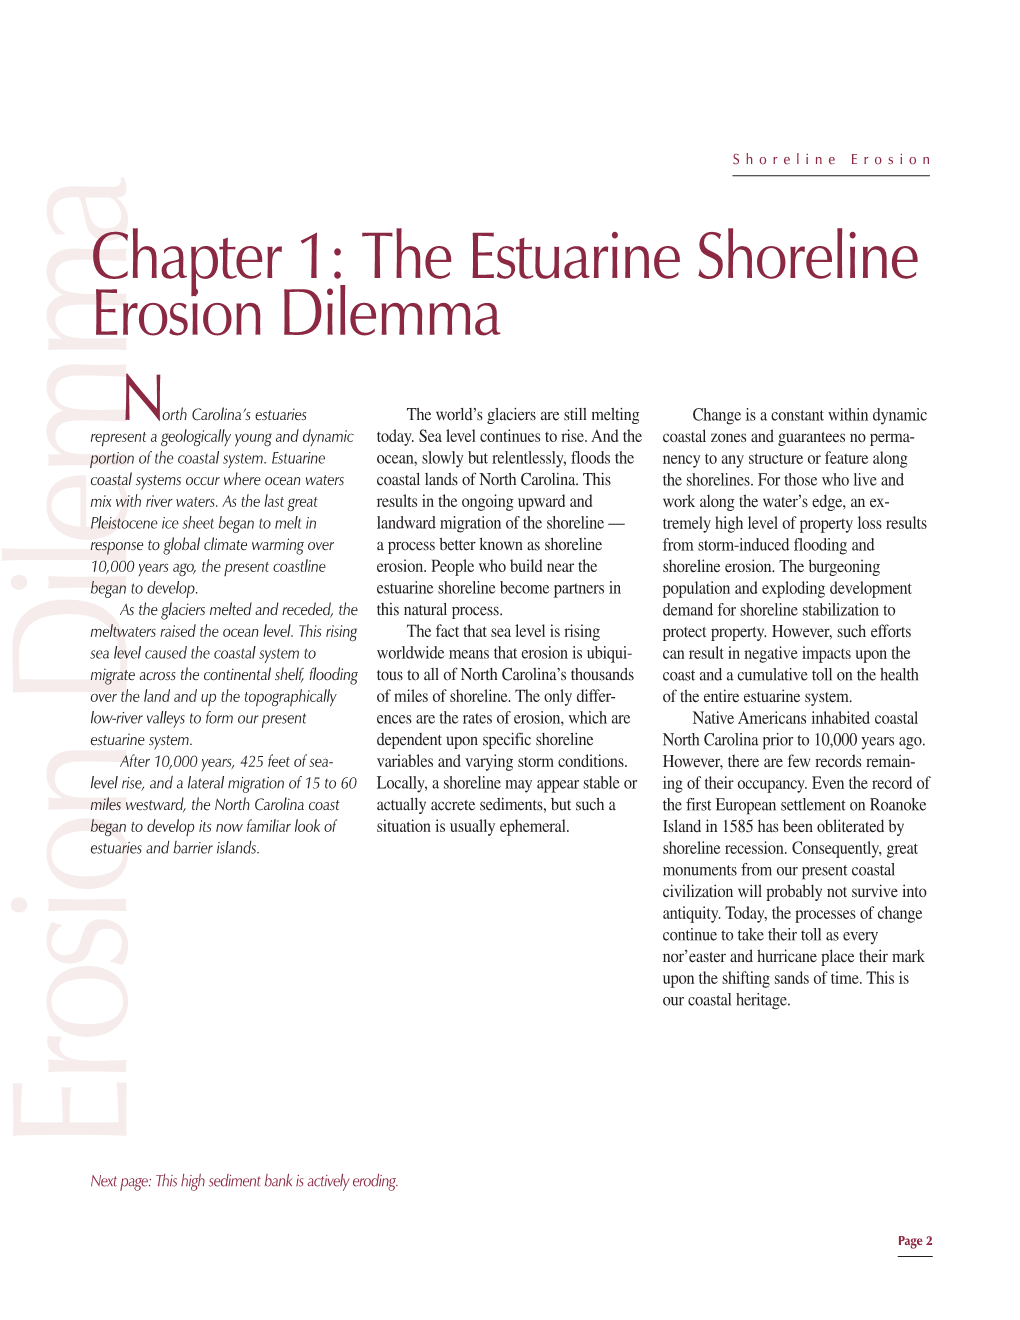 The Estuarine Shoreline Erosion Dilemma